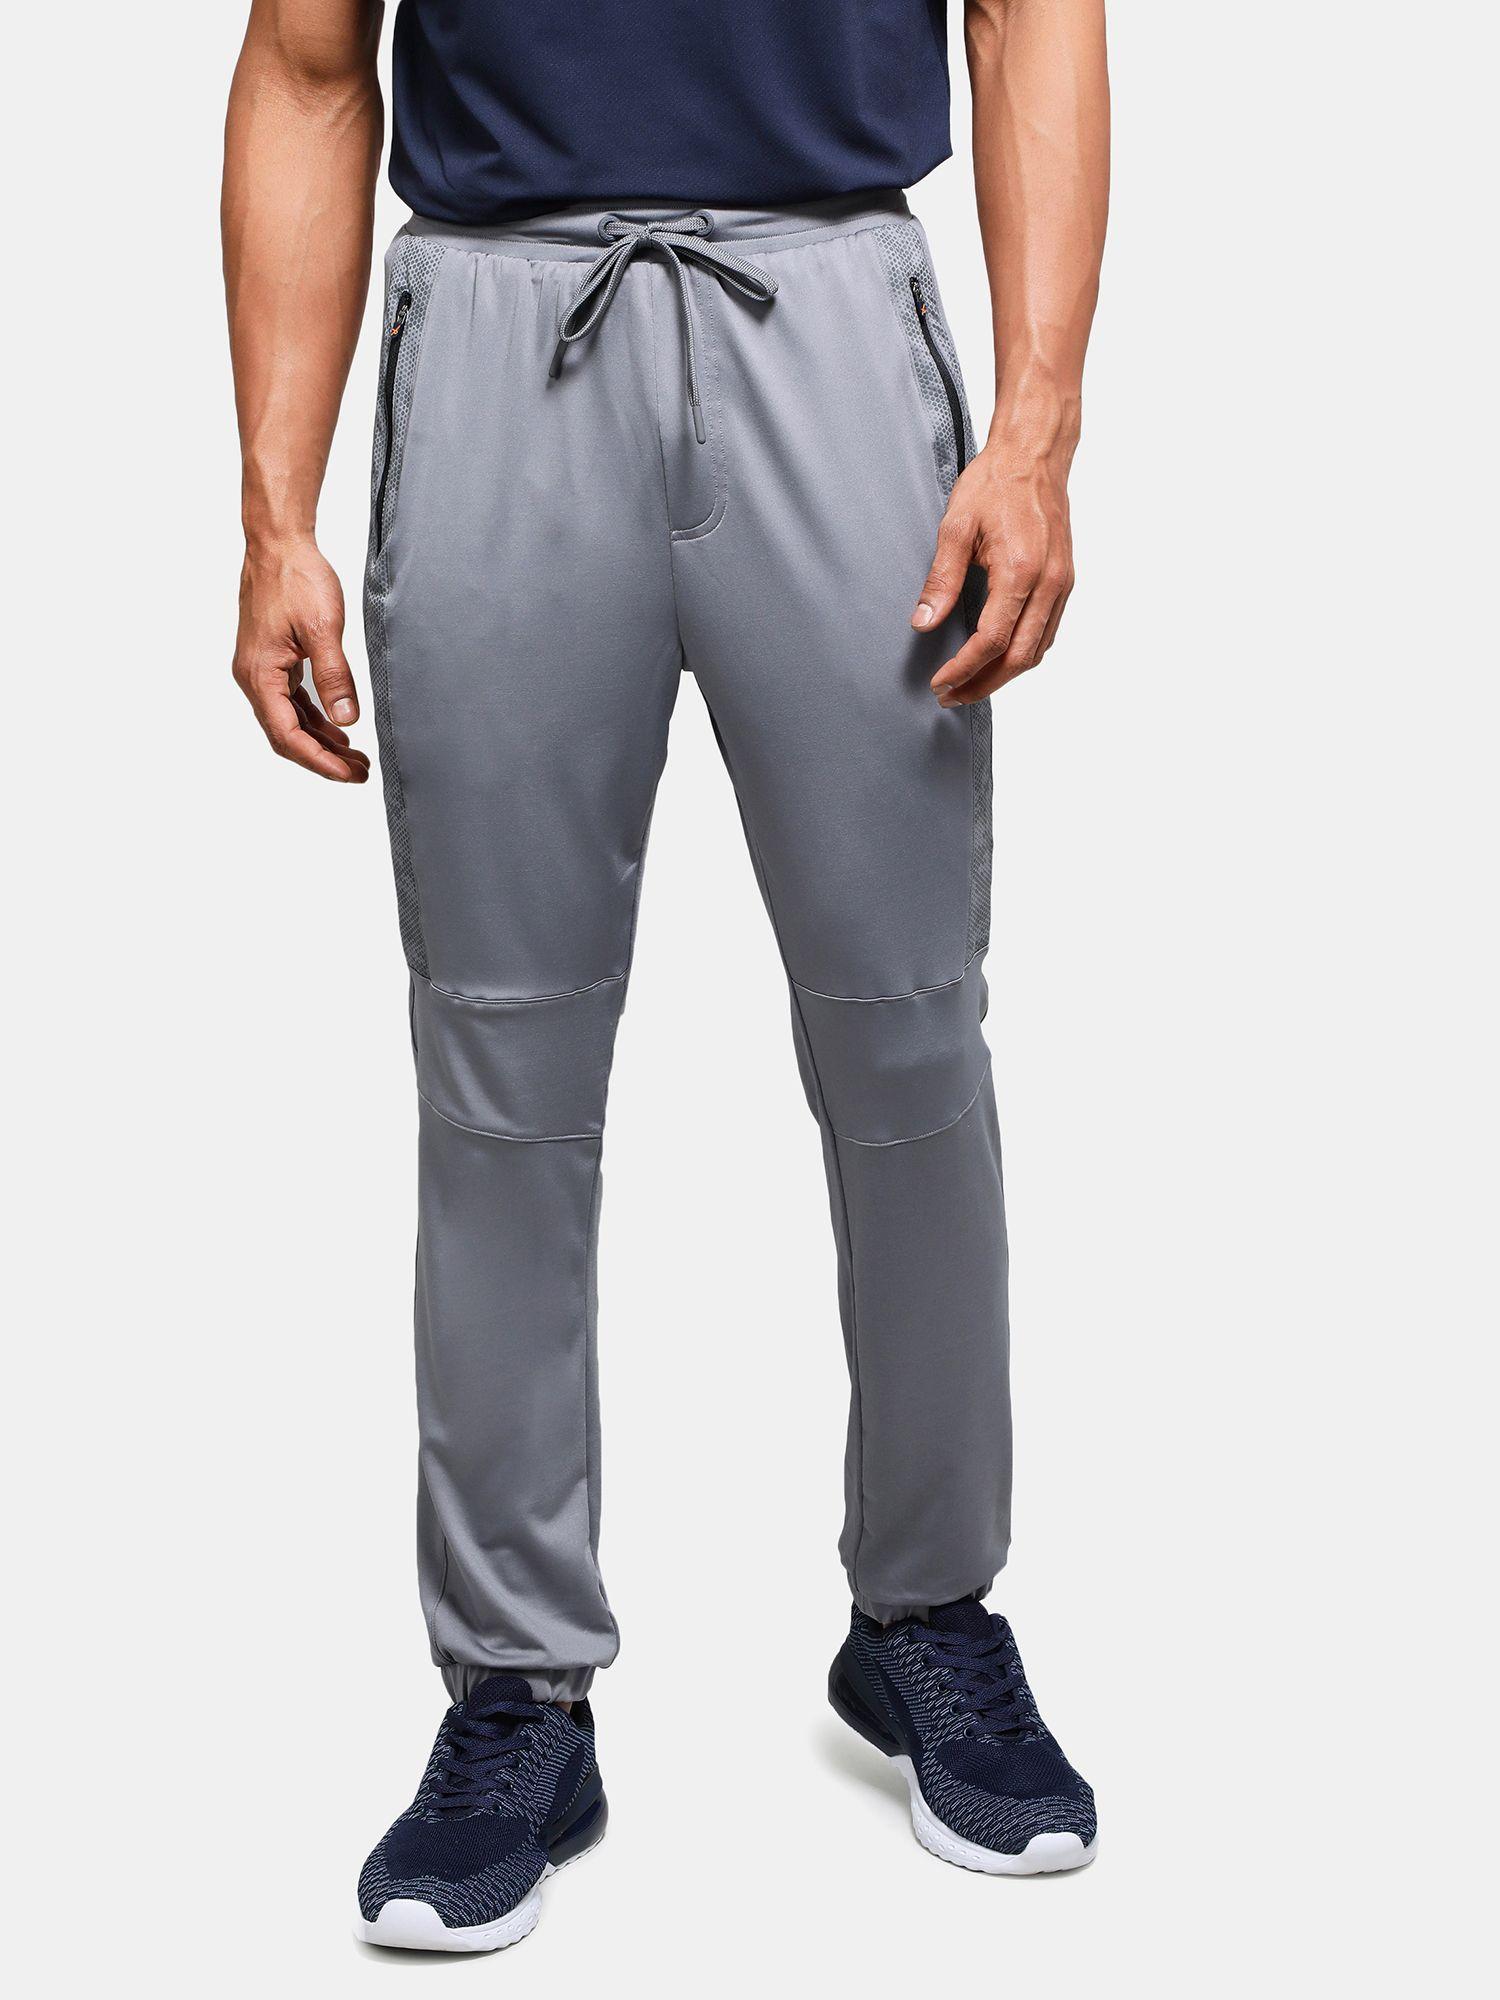 mv12-men-microfiber-stretch-joggers-with-zipper-pockets-&-stay-dry-treatment-grey